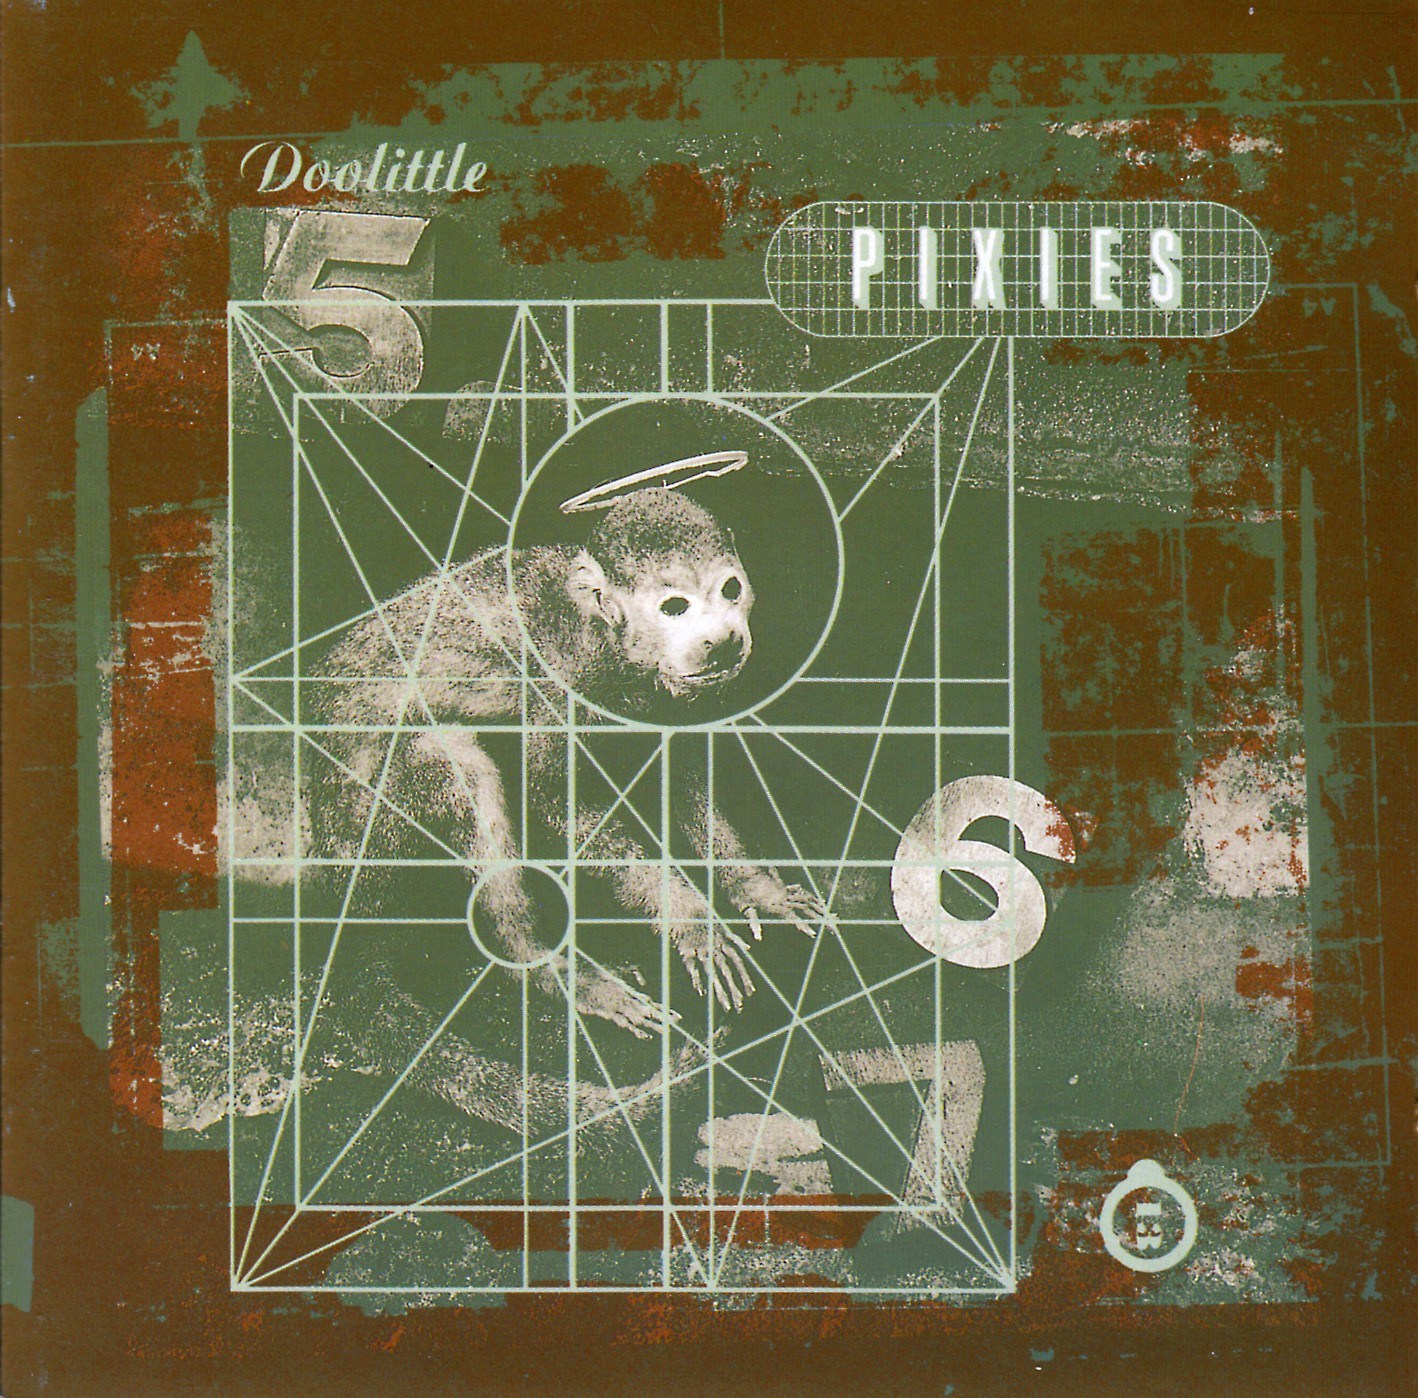 Pixies Doolittle